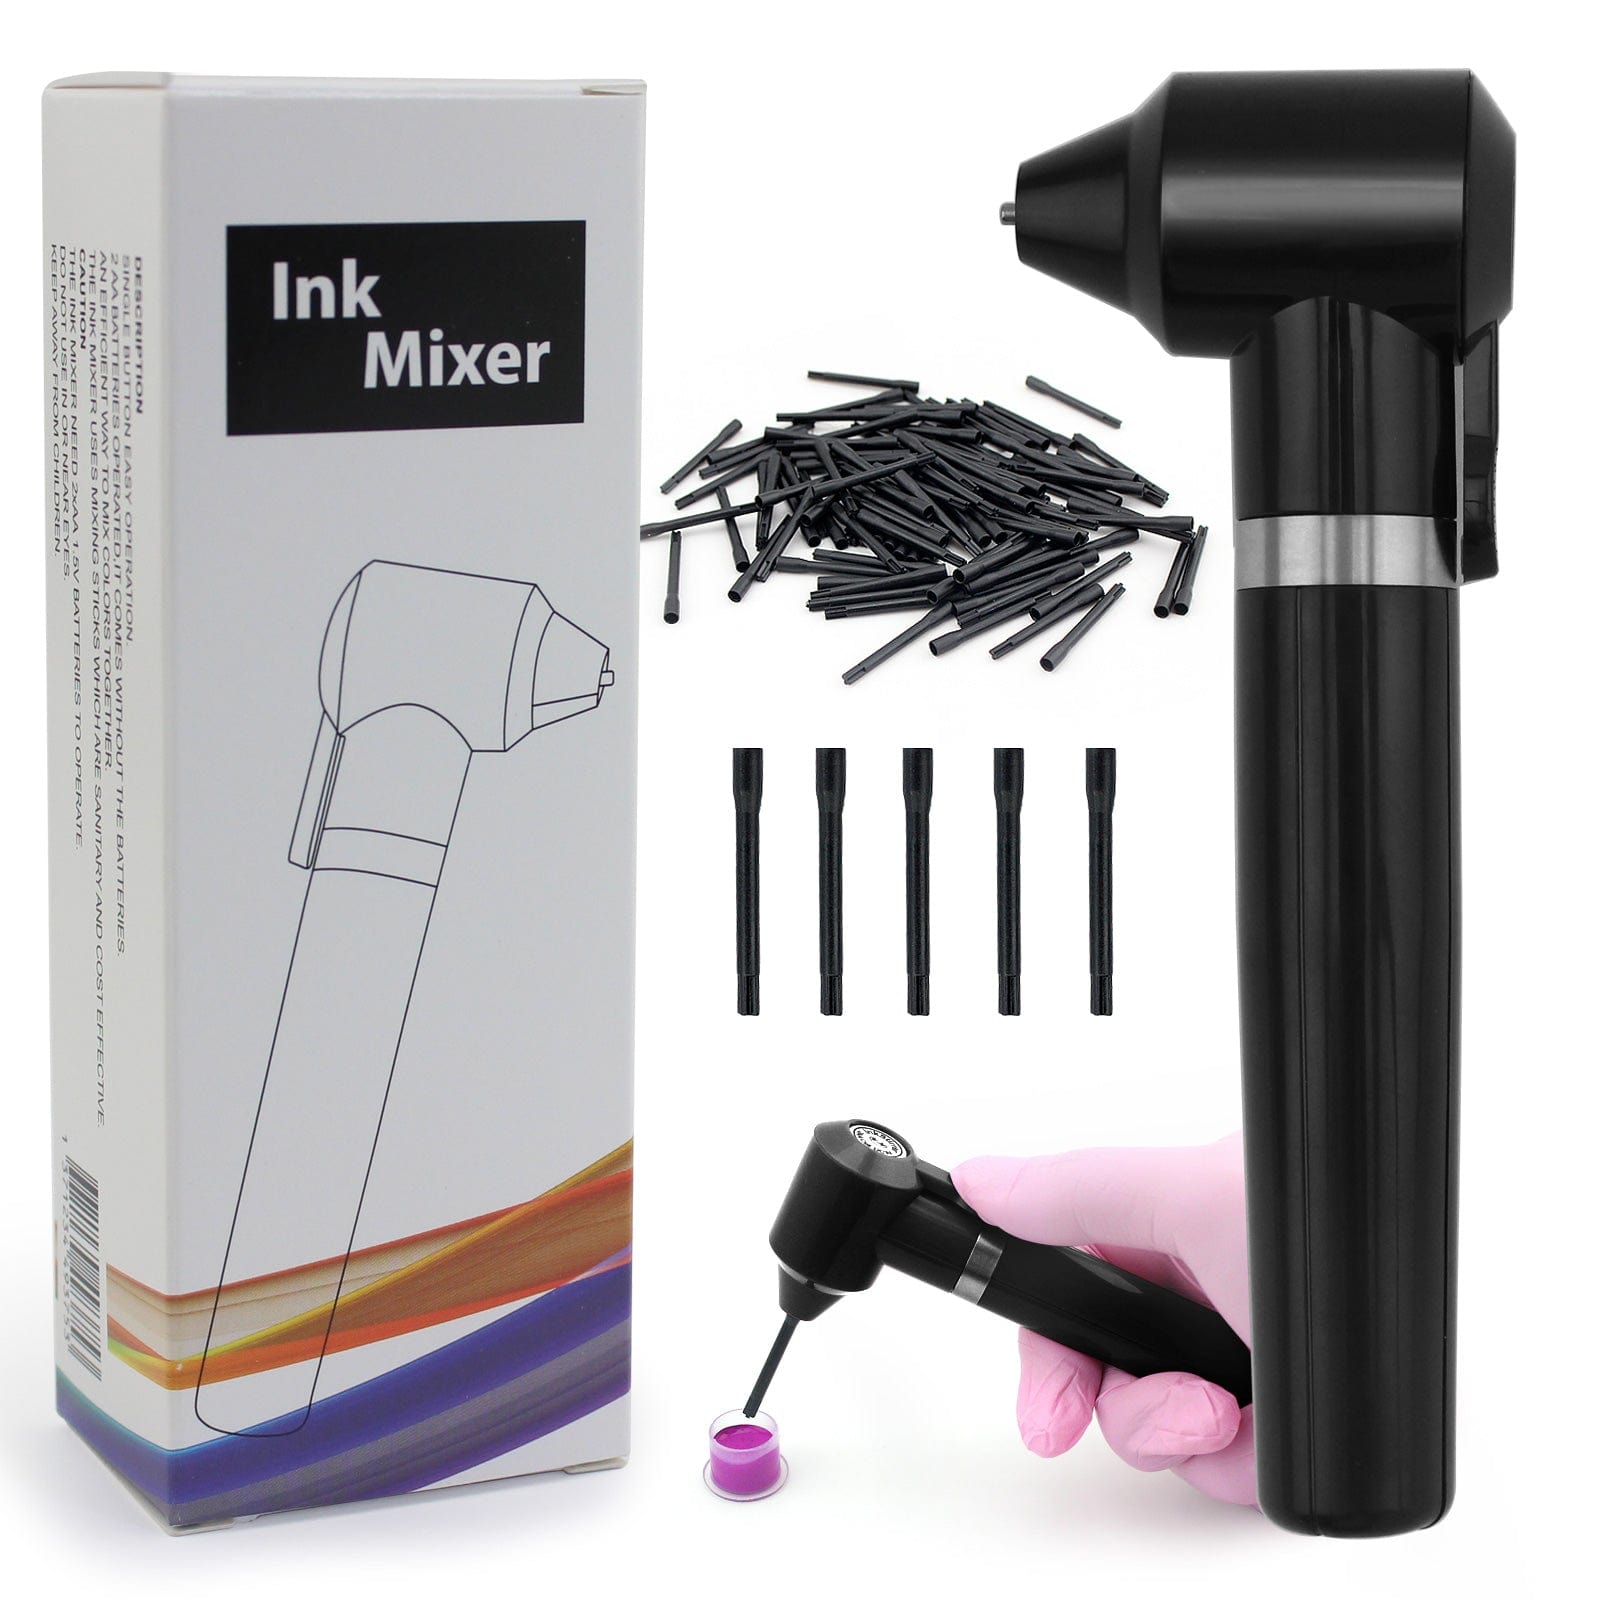 Tattoo Ink Mixer - Handheld Battery-Powered Ink Mixer